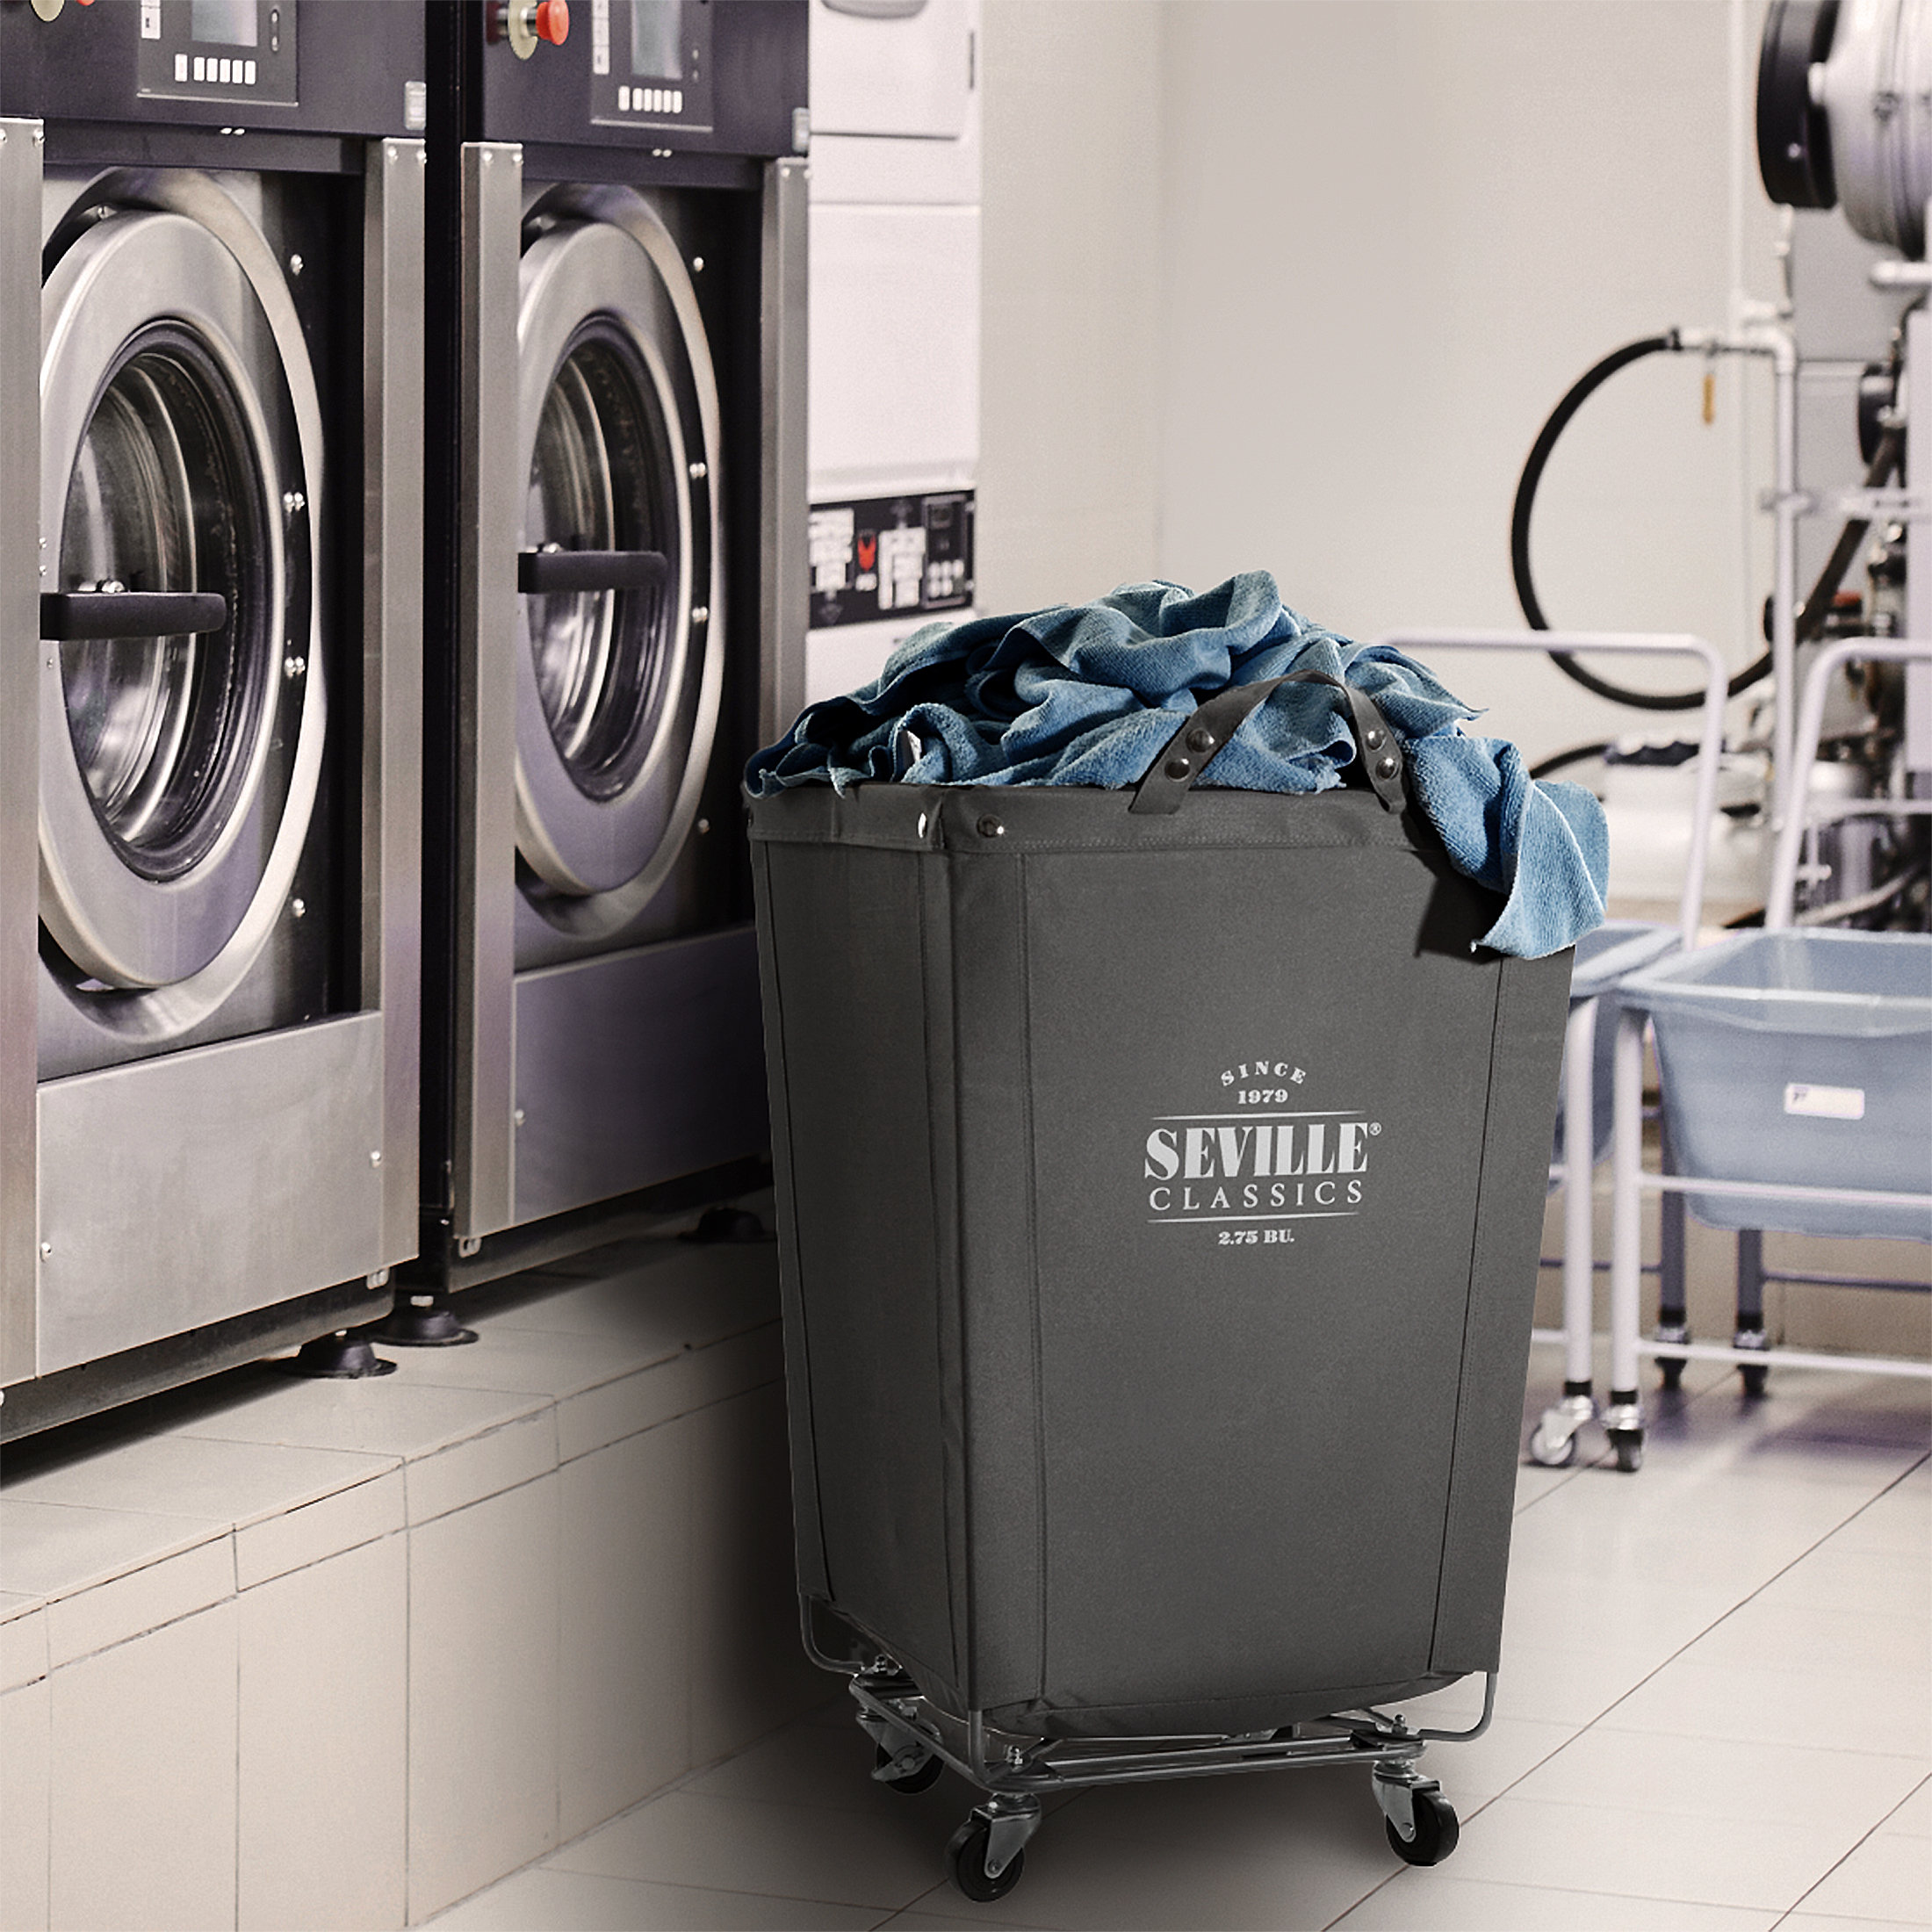 Seville Classics Inc. Commercial Laundry Hamper & Reviews